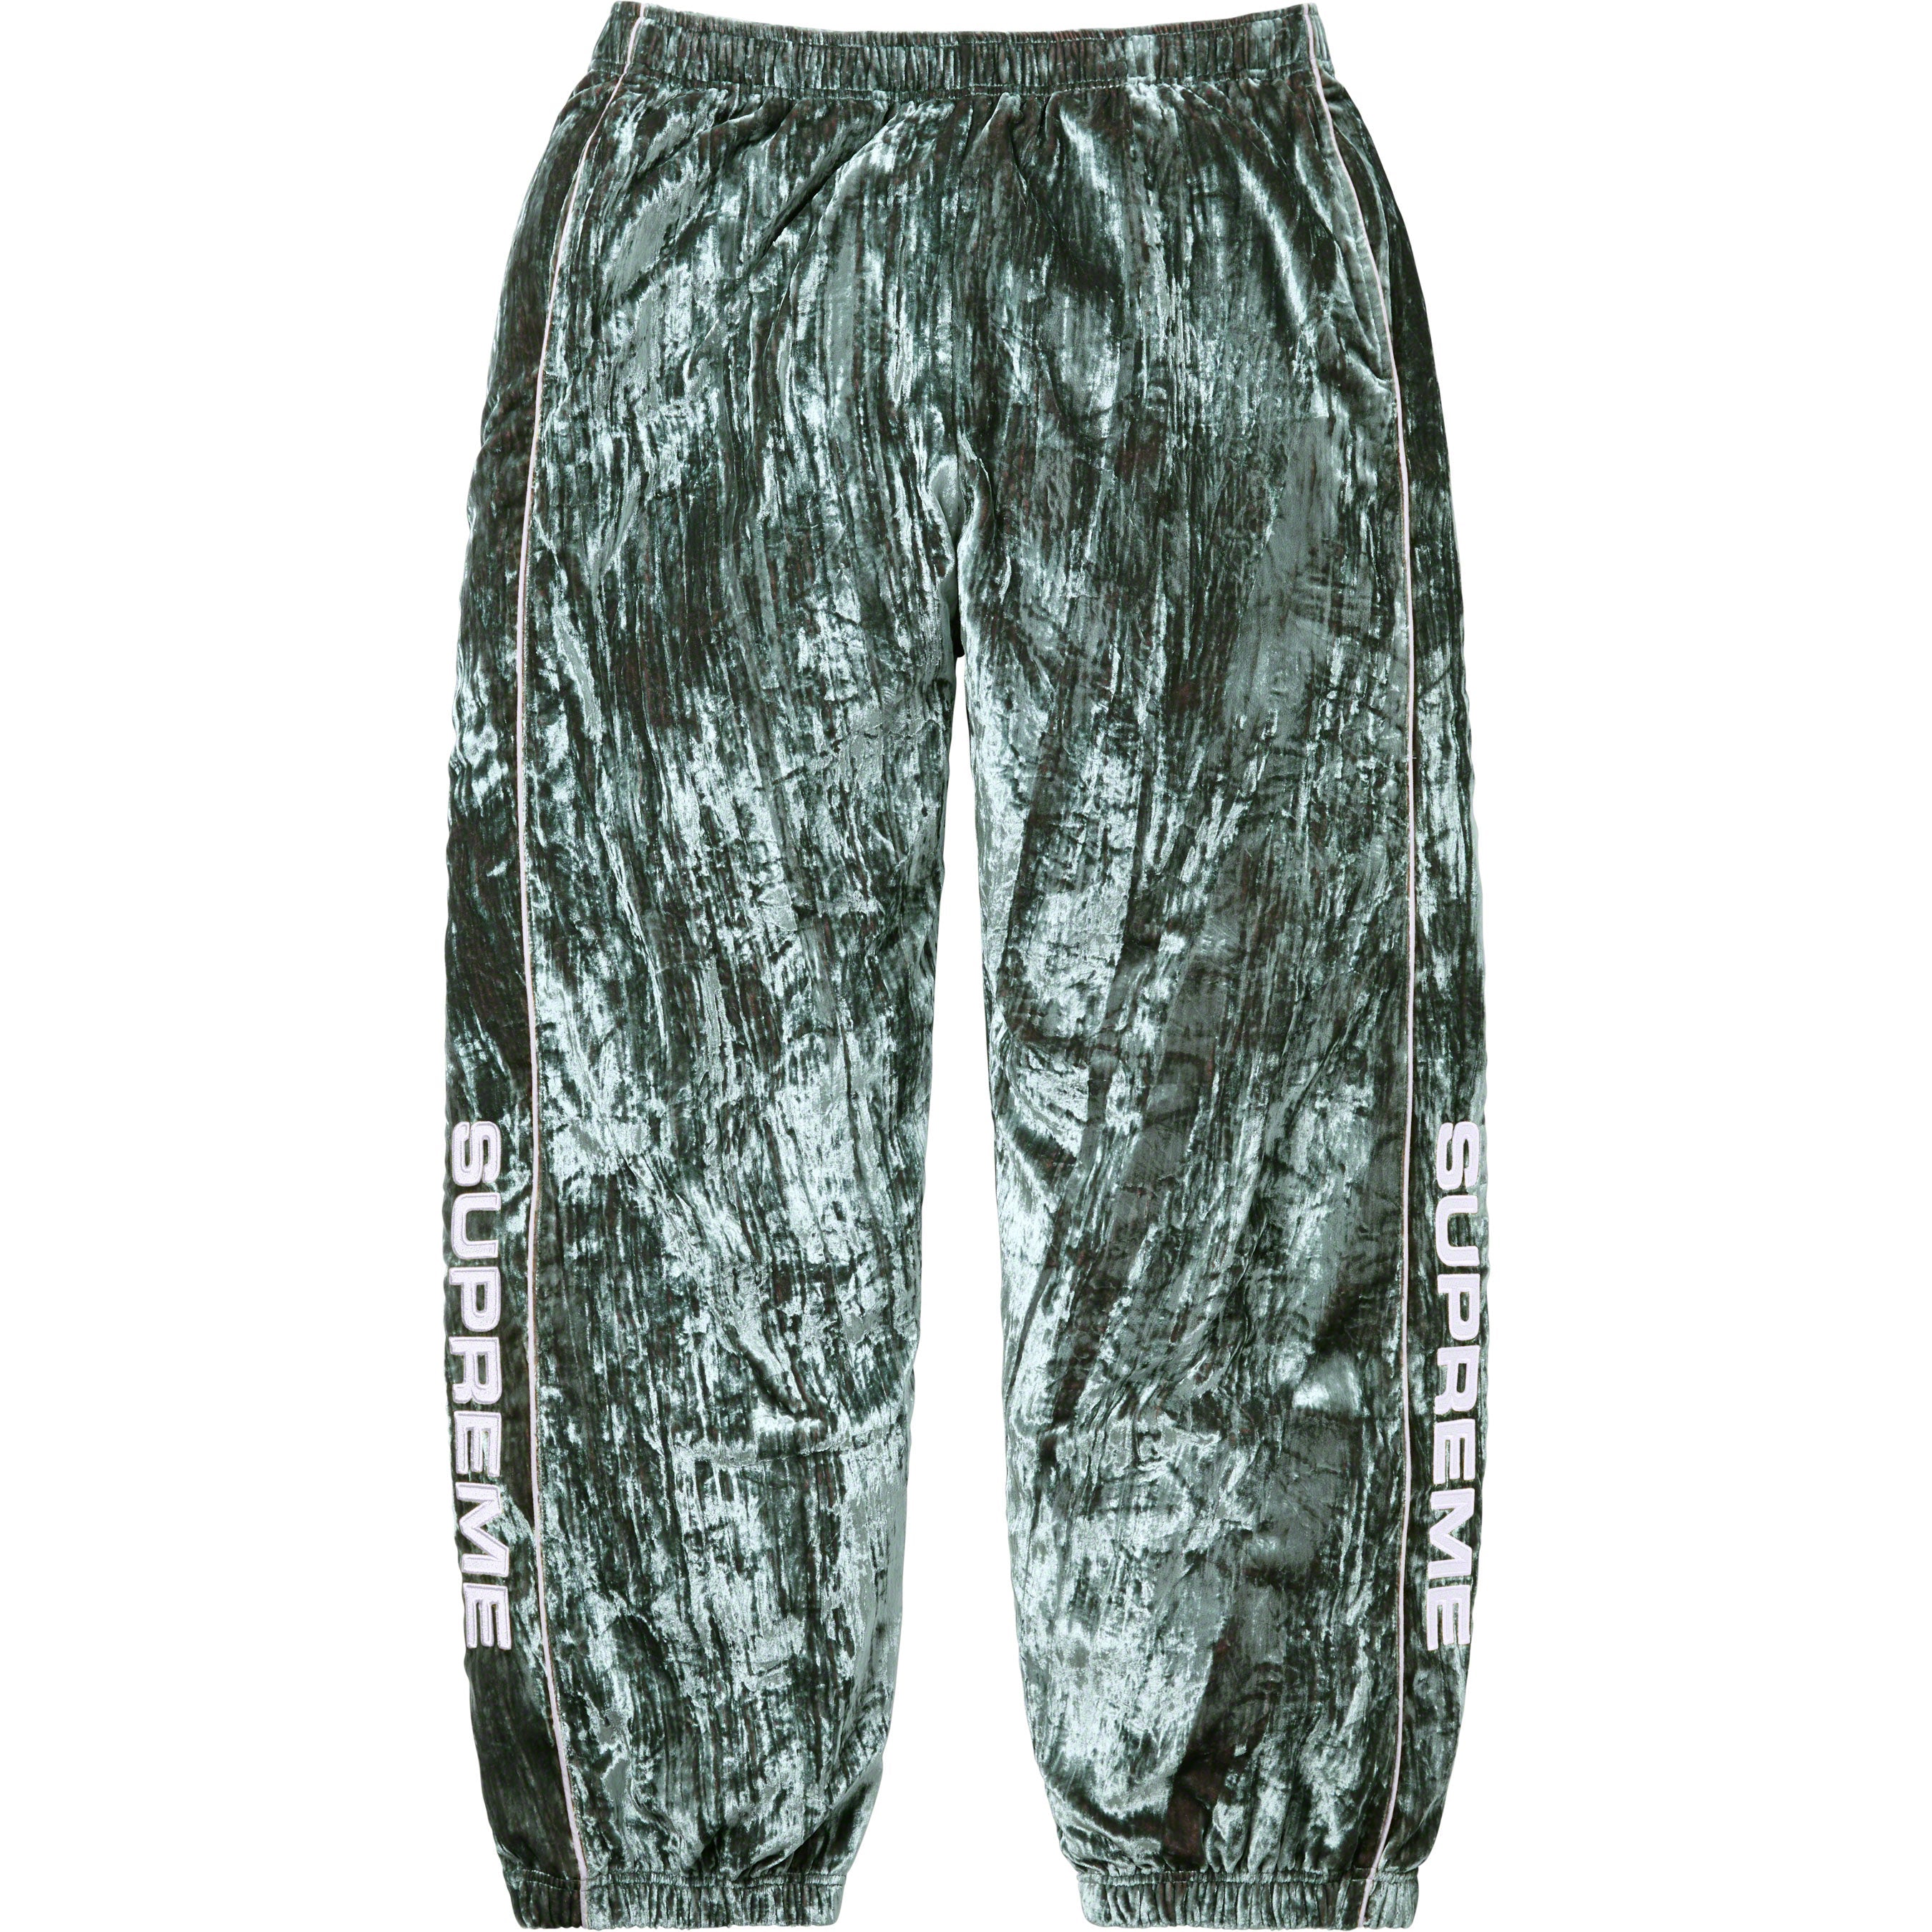 followme Printed Velour Pajama Top with Jogger Pant 6757-10195-S